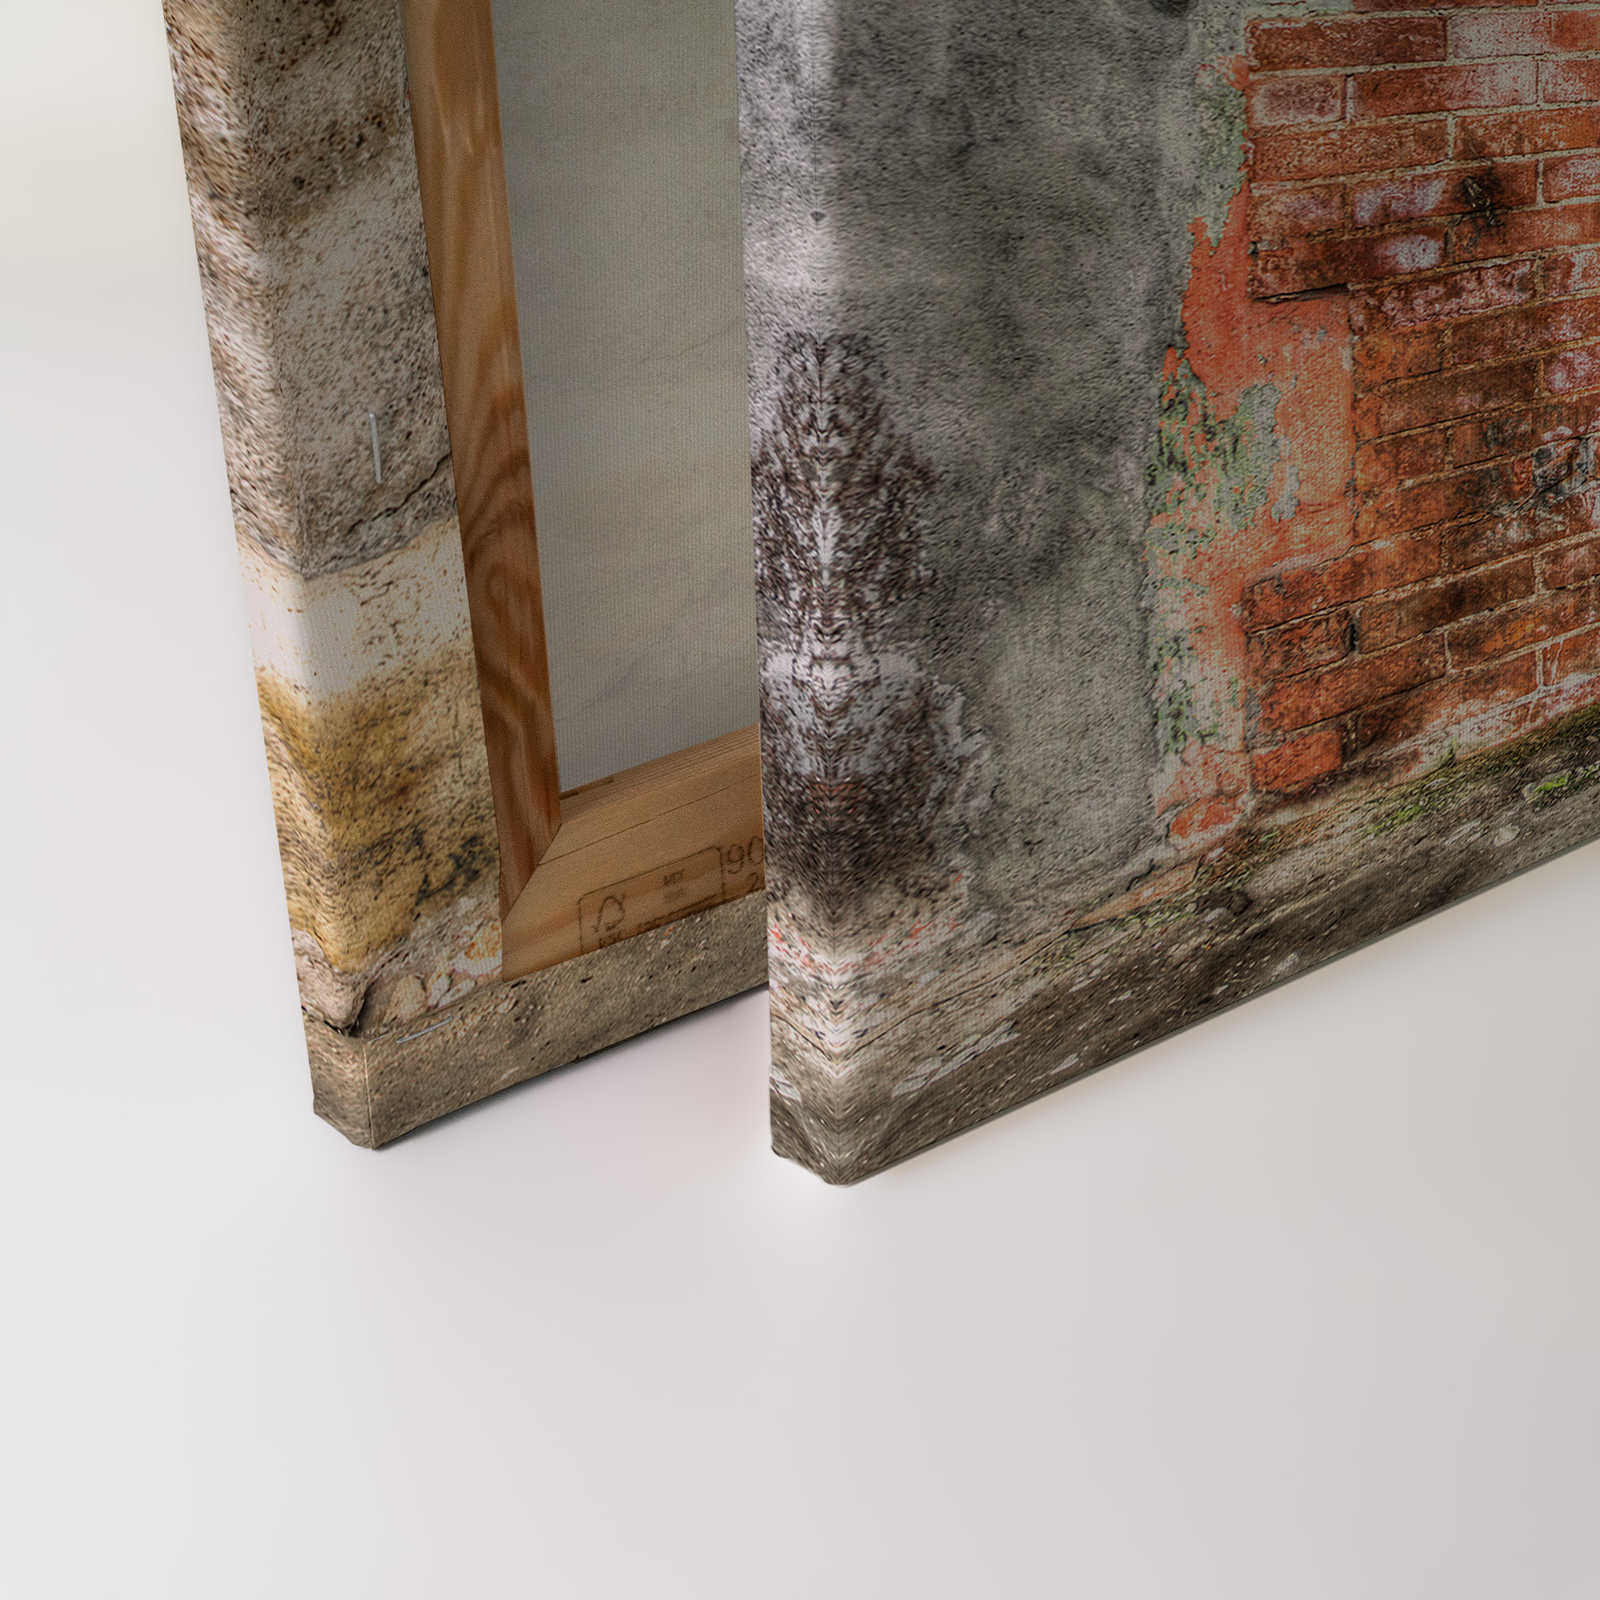             Lienzo Pared de piedra con puertas de aseo vintage | gris, naranja, beige - 0,90 m x 0,60 m
        